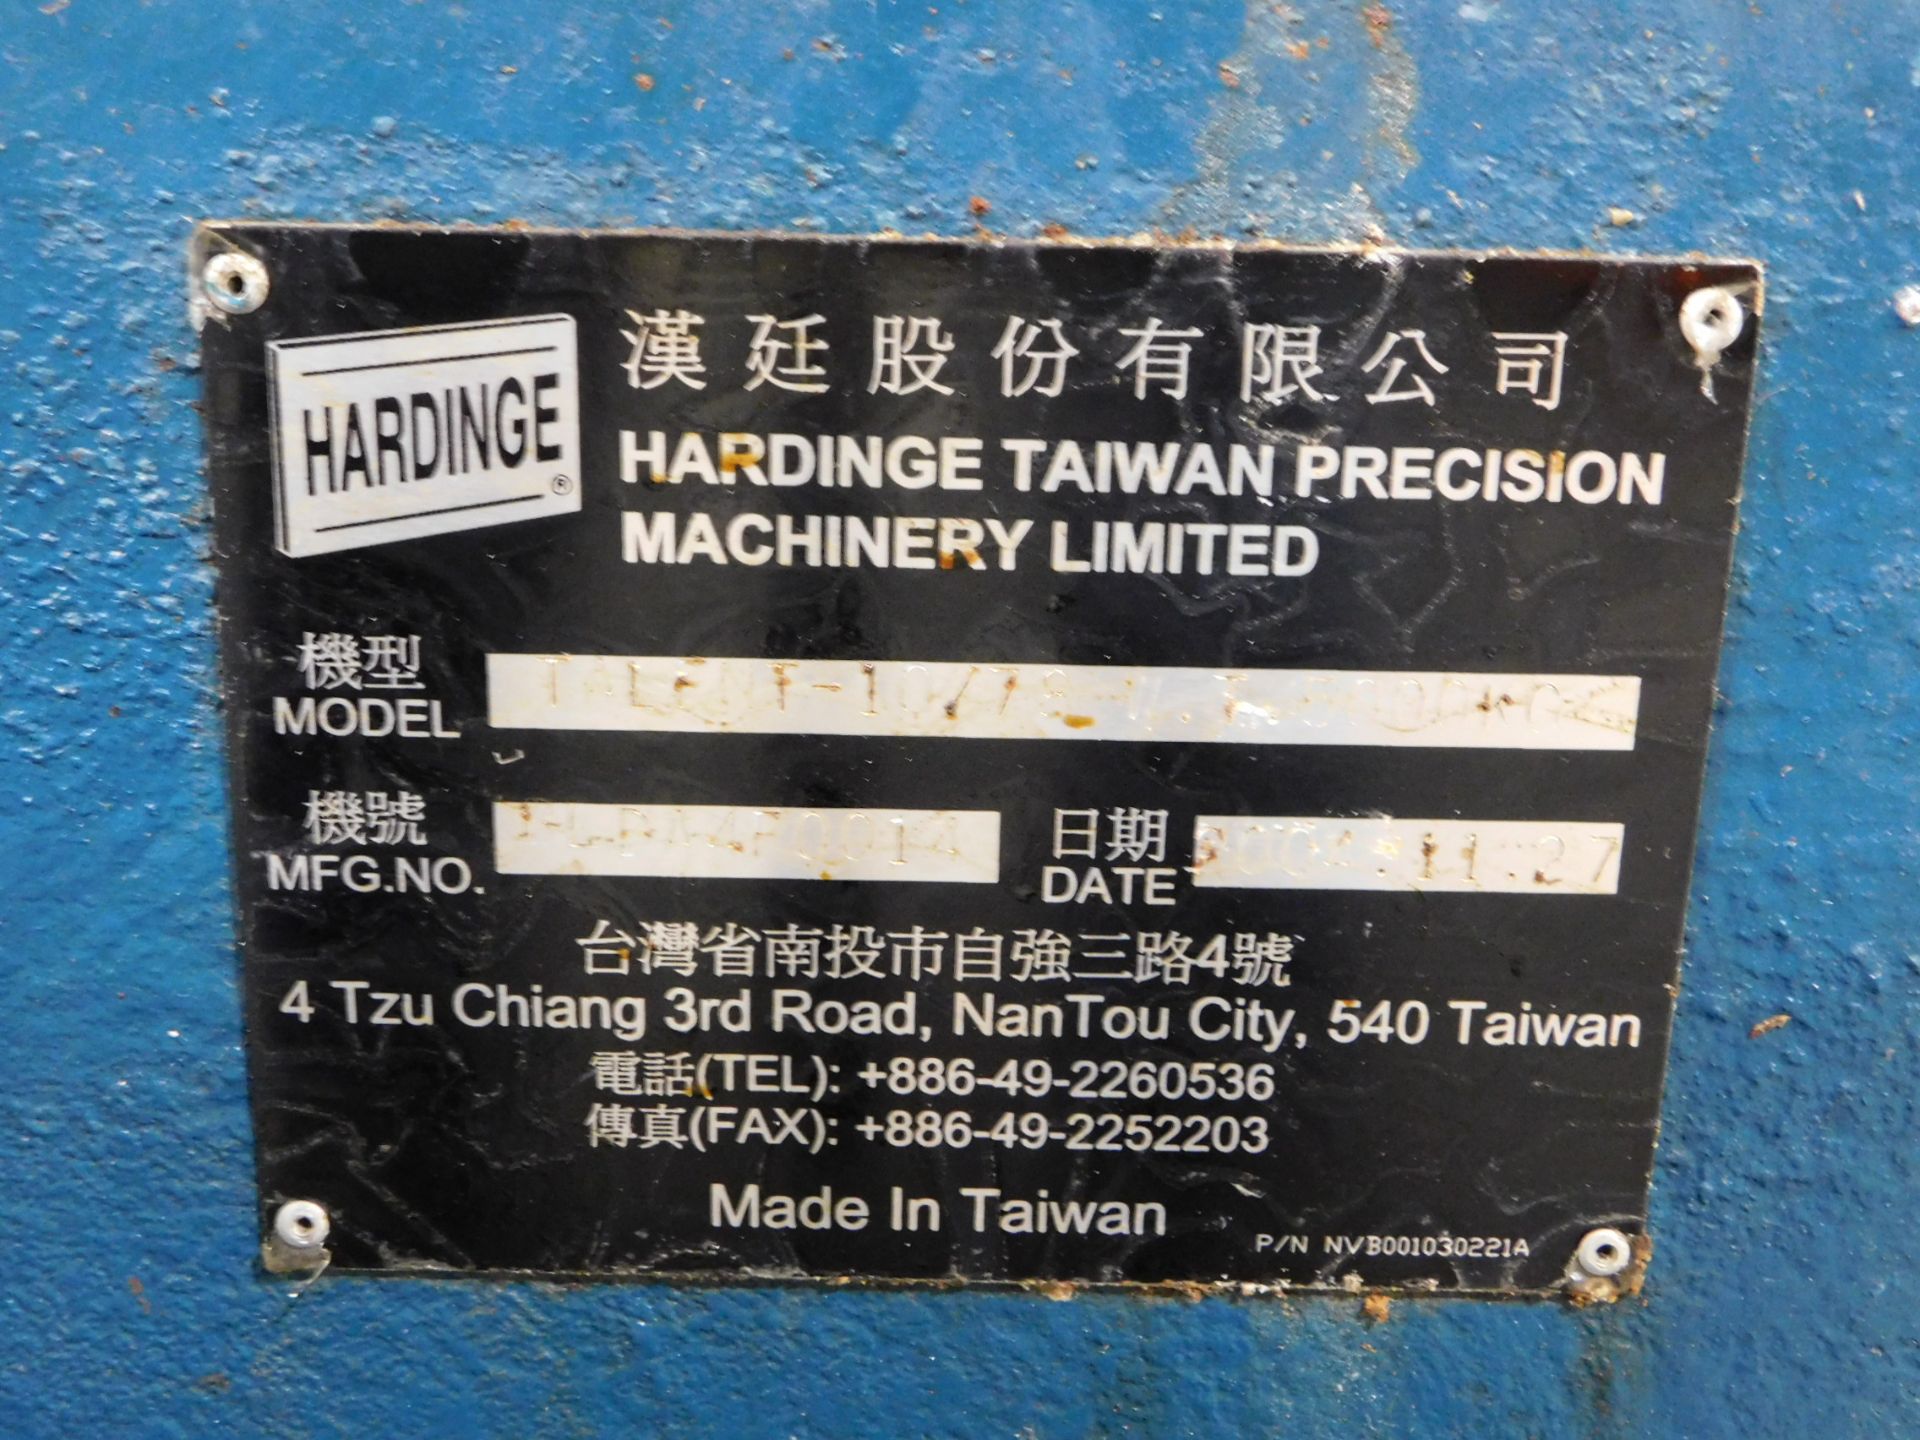 Hardinge Model Talent 10/78 CNC Turning Center, Fanuc 0i-TB CNC Control, 3 In. Capacity, 14 In. Max. - Image 15 of 15